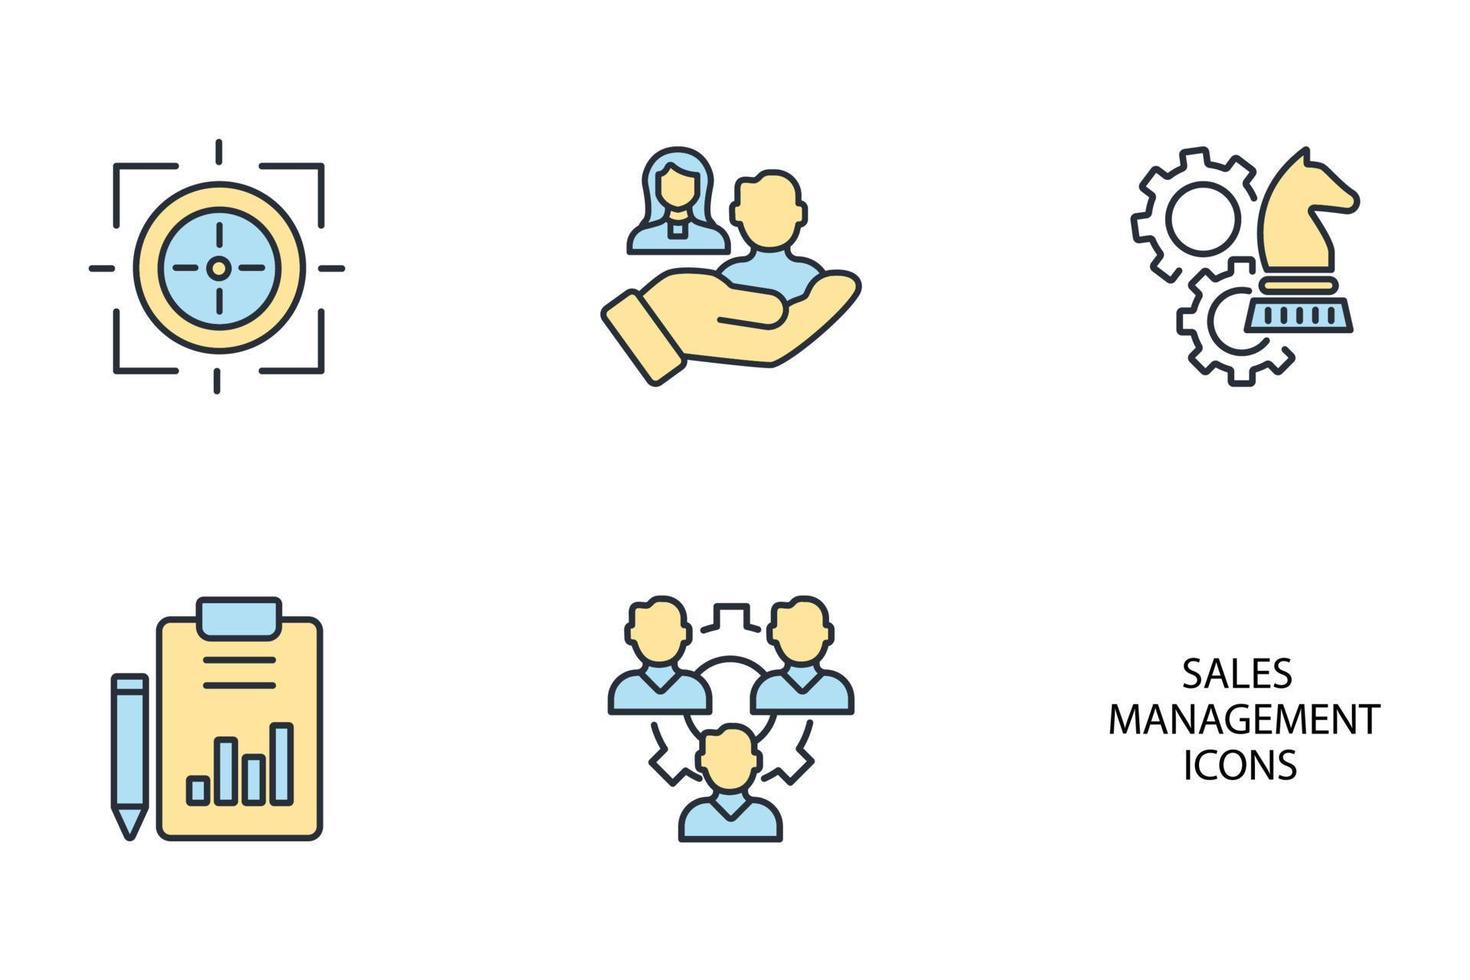 Sales management icons set . Sales management pack symbol vector elements for infographic web